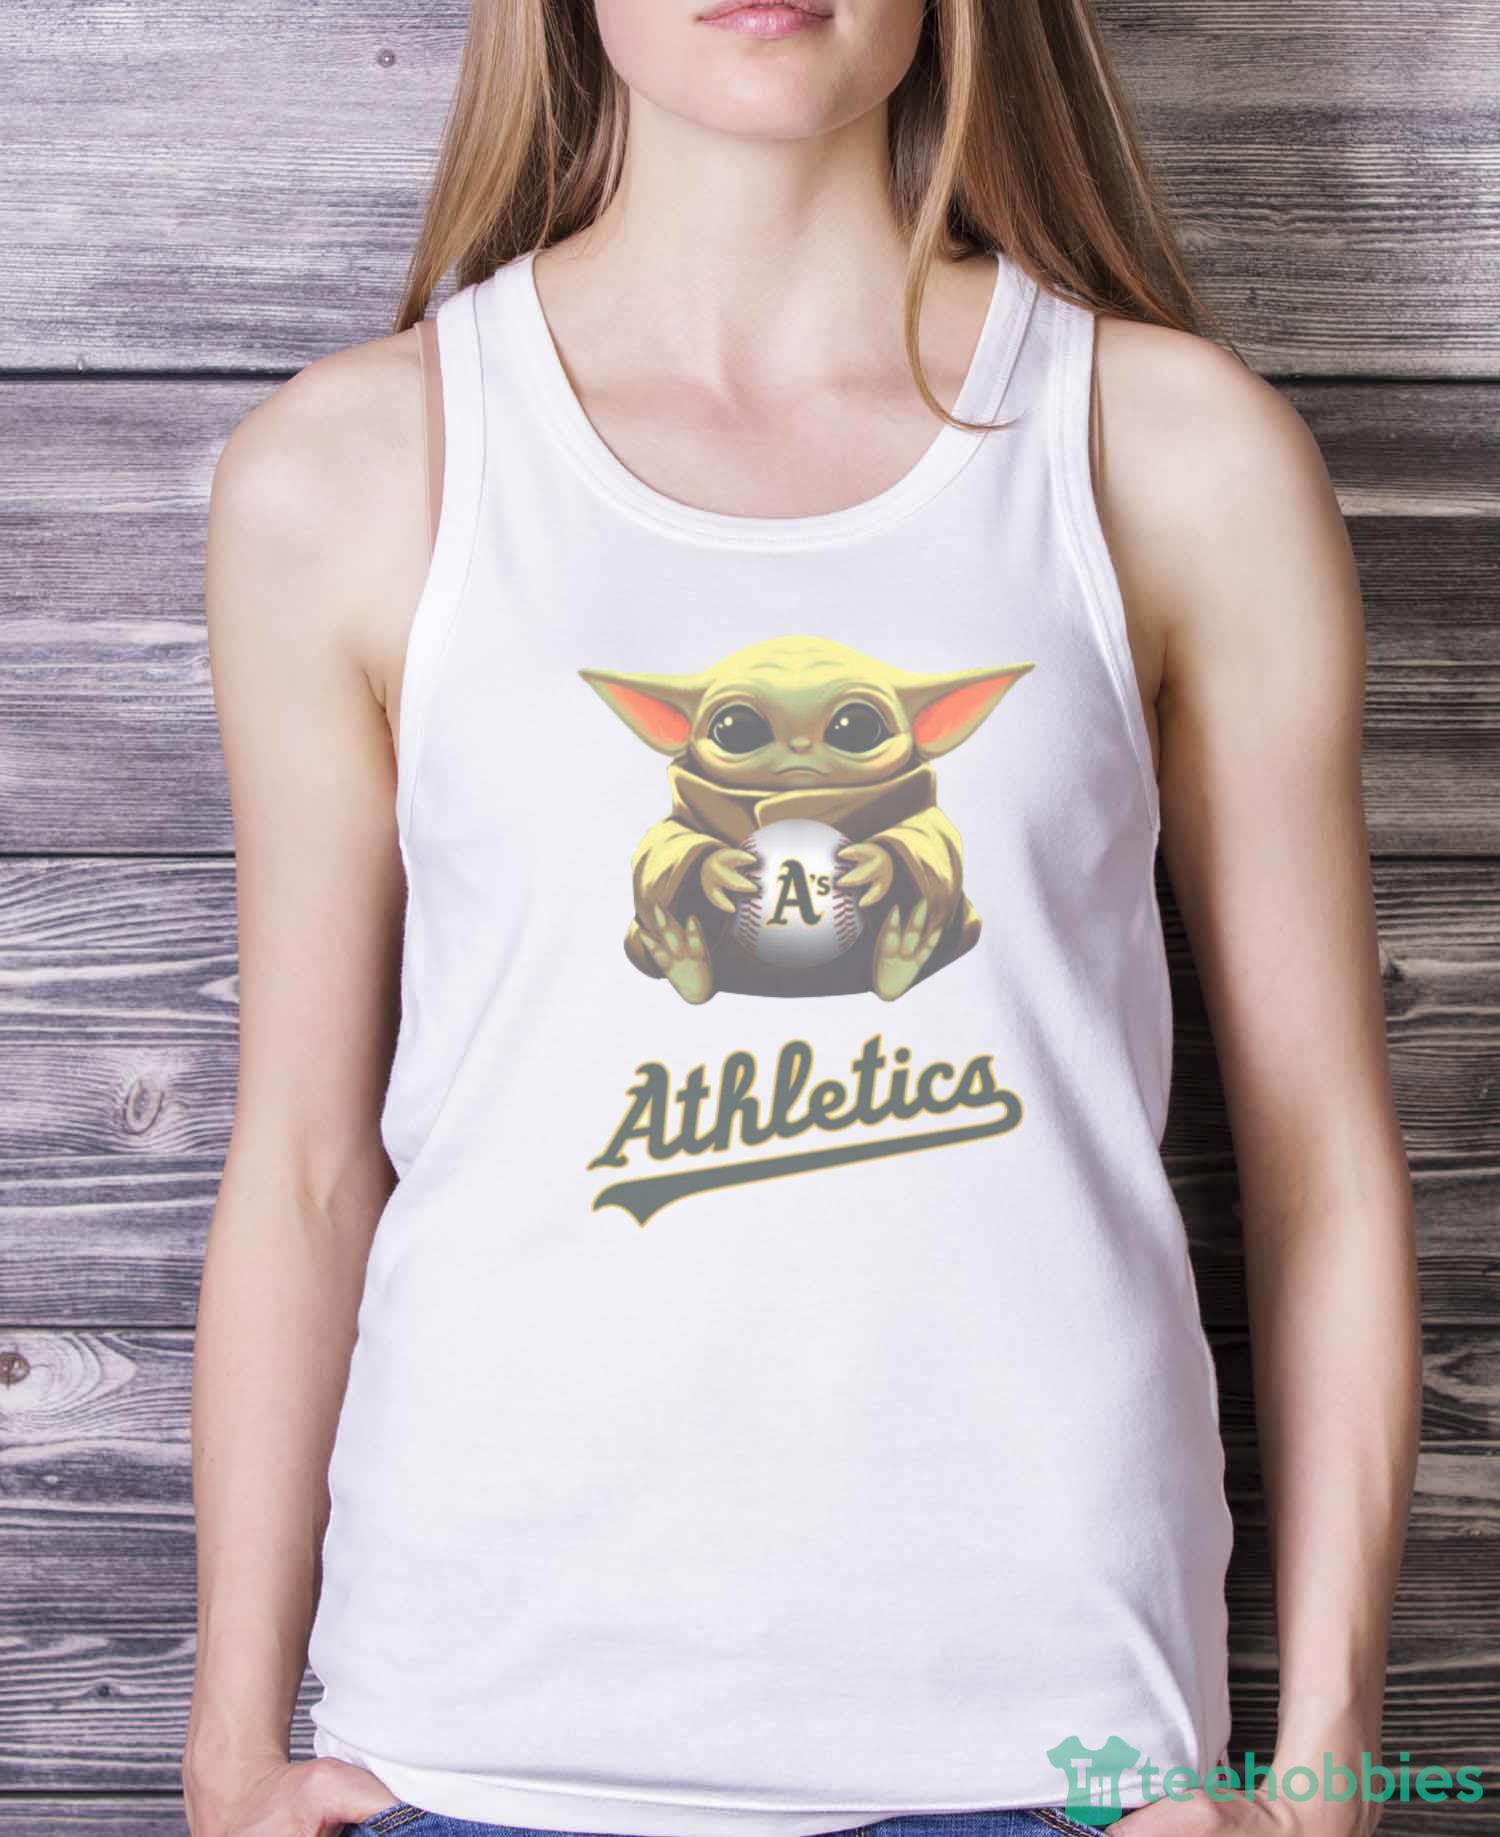 MLB Baseball Oakland Athletics Star Wars Baby Yoda Shirt T Shirt - White Ladies Tank Top